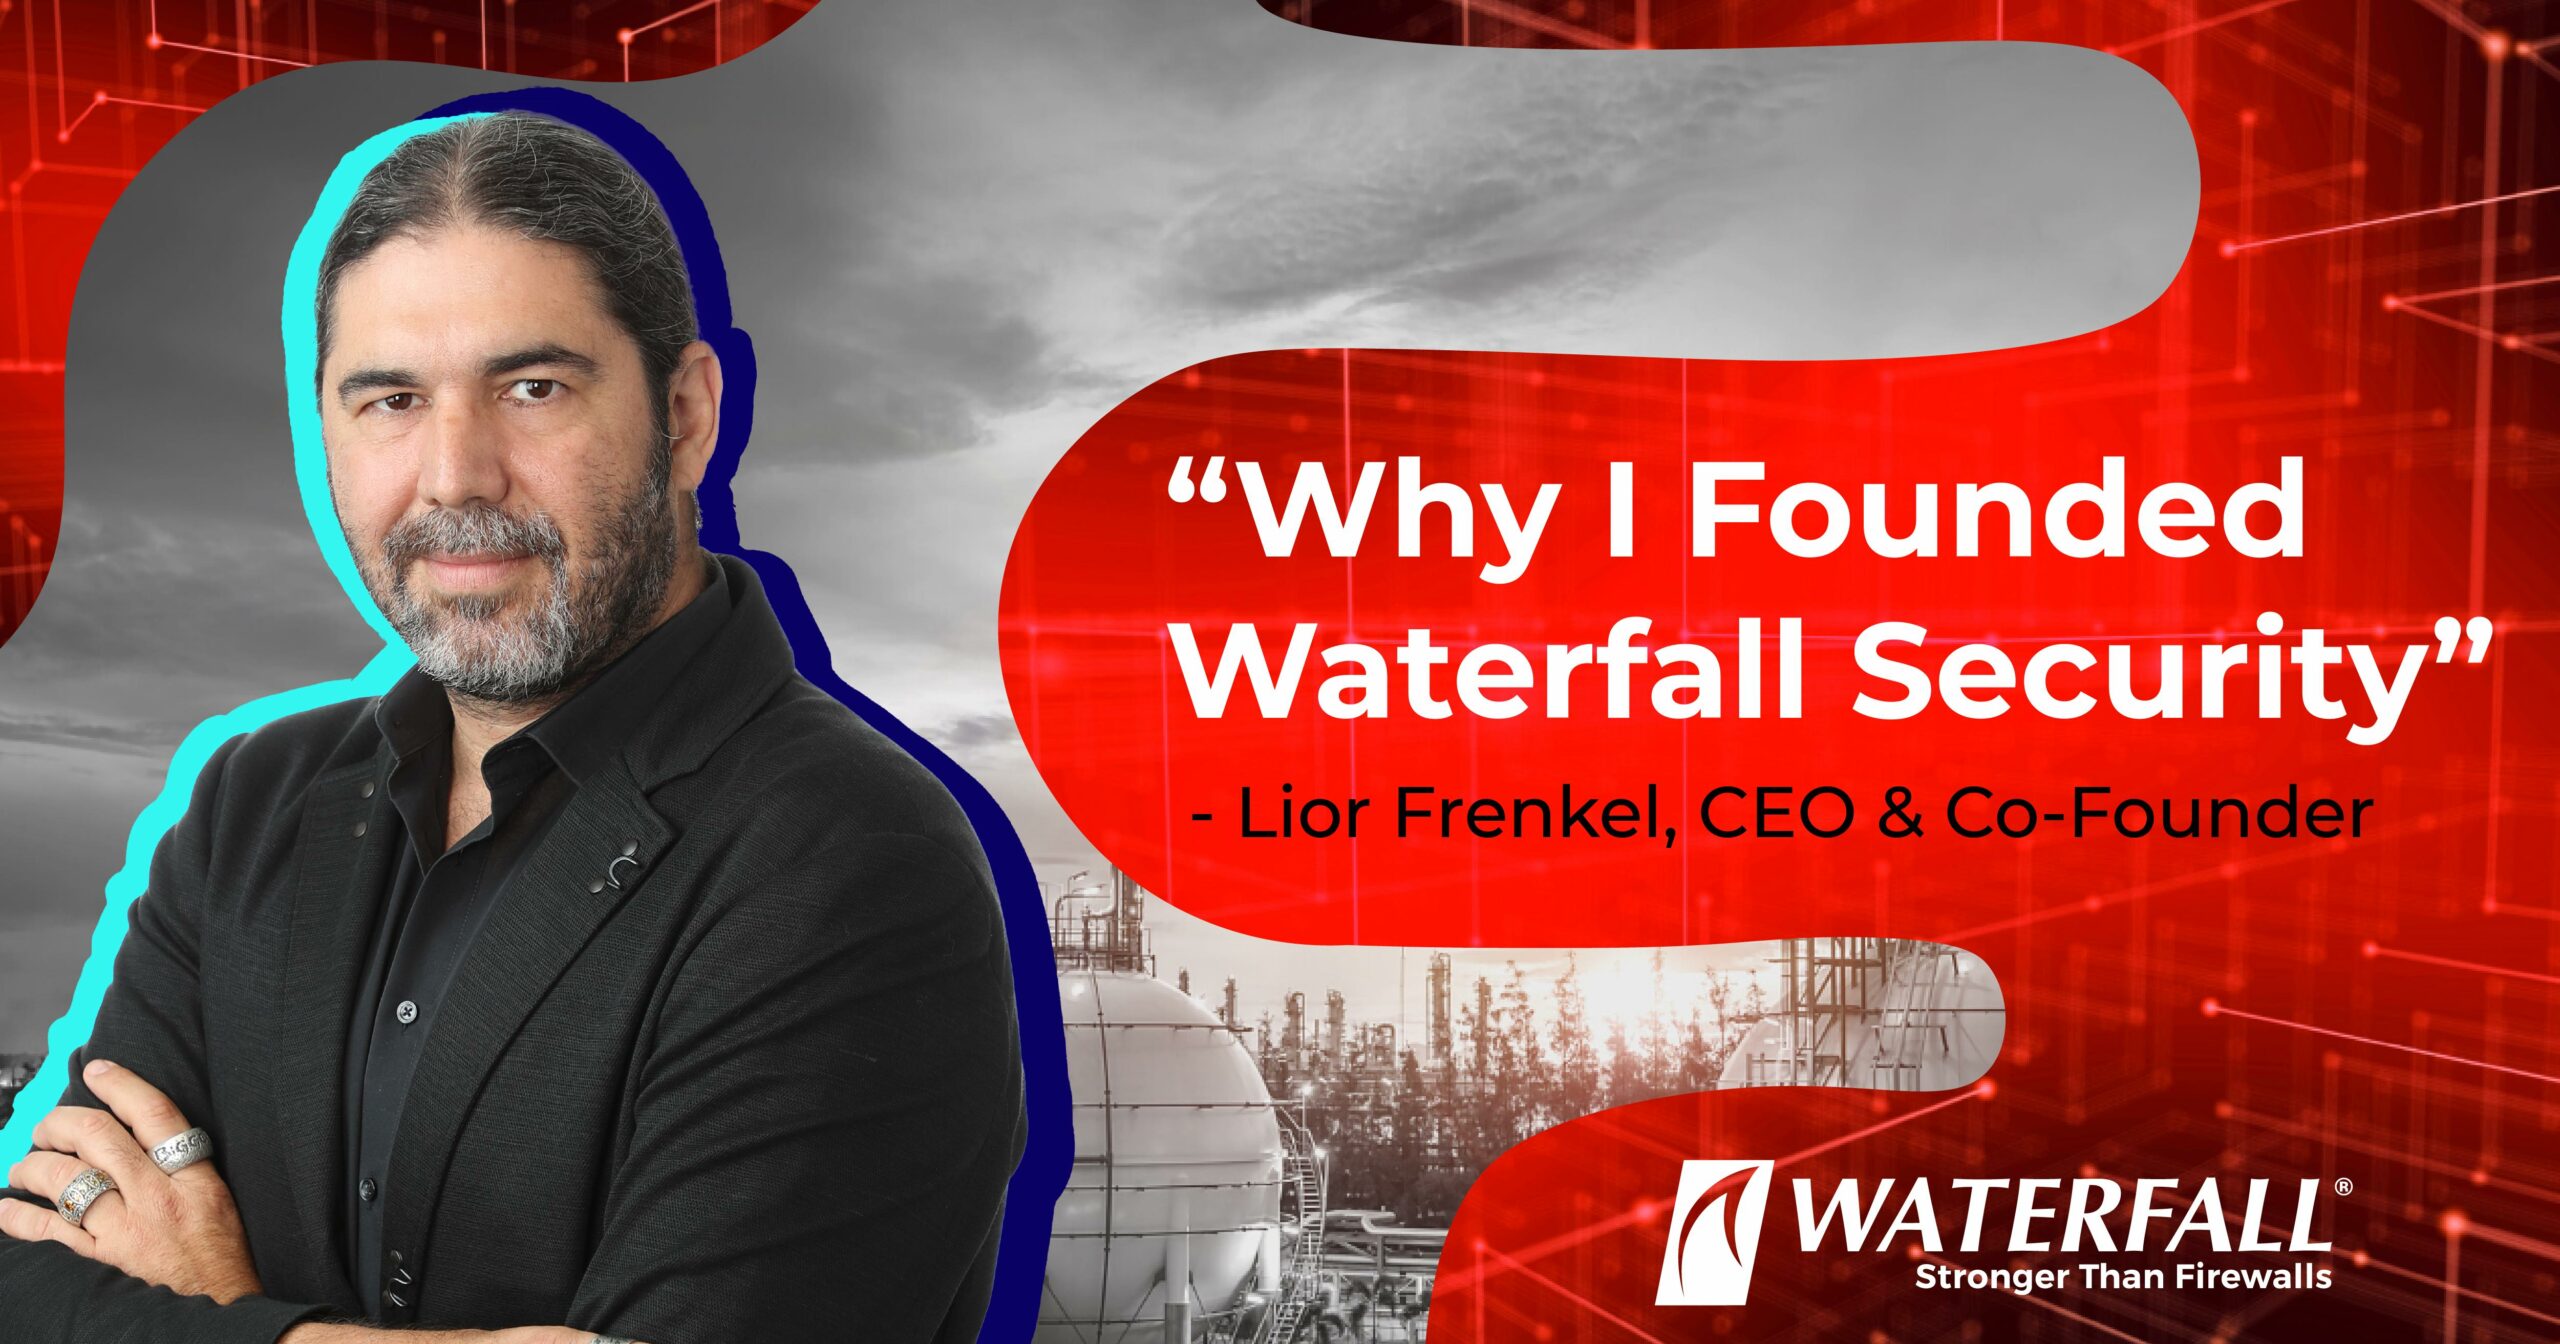 Lior Frenkel, CEO of Waterfall Security